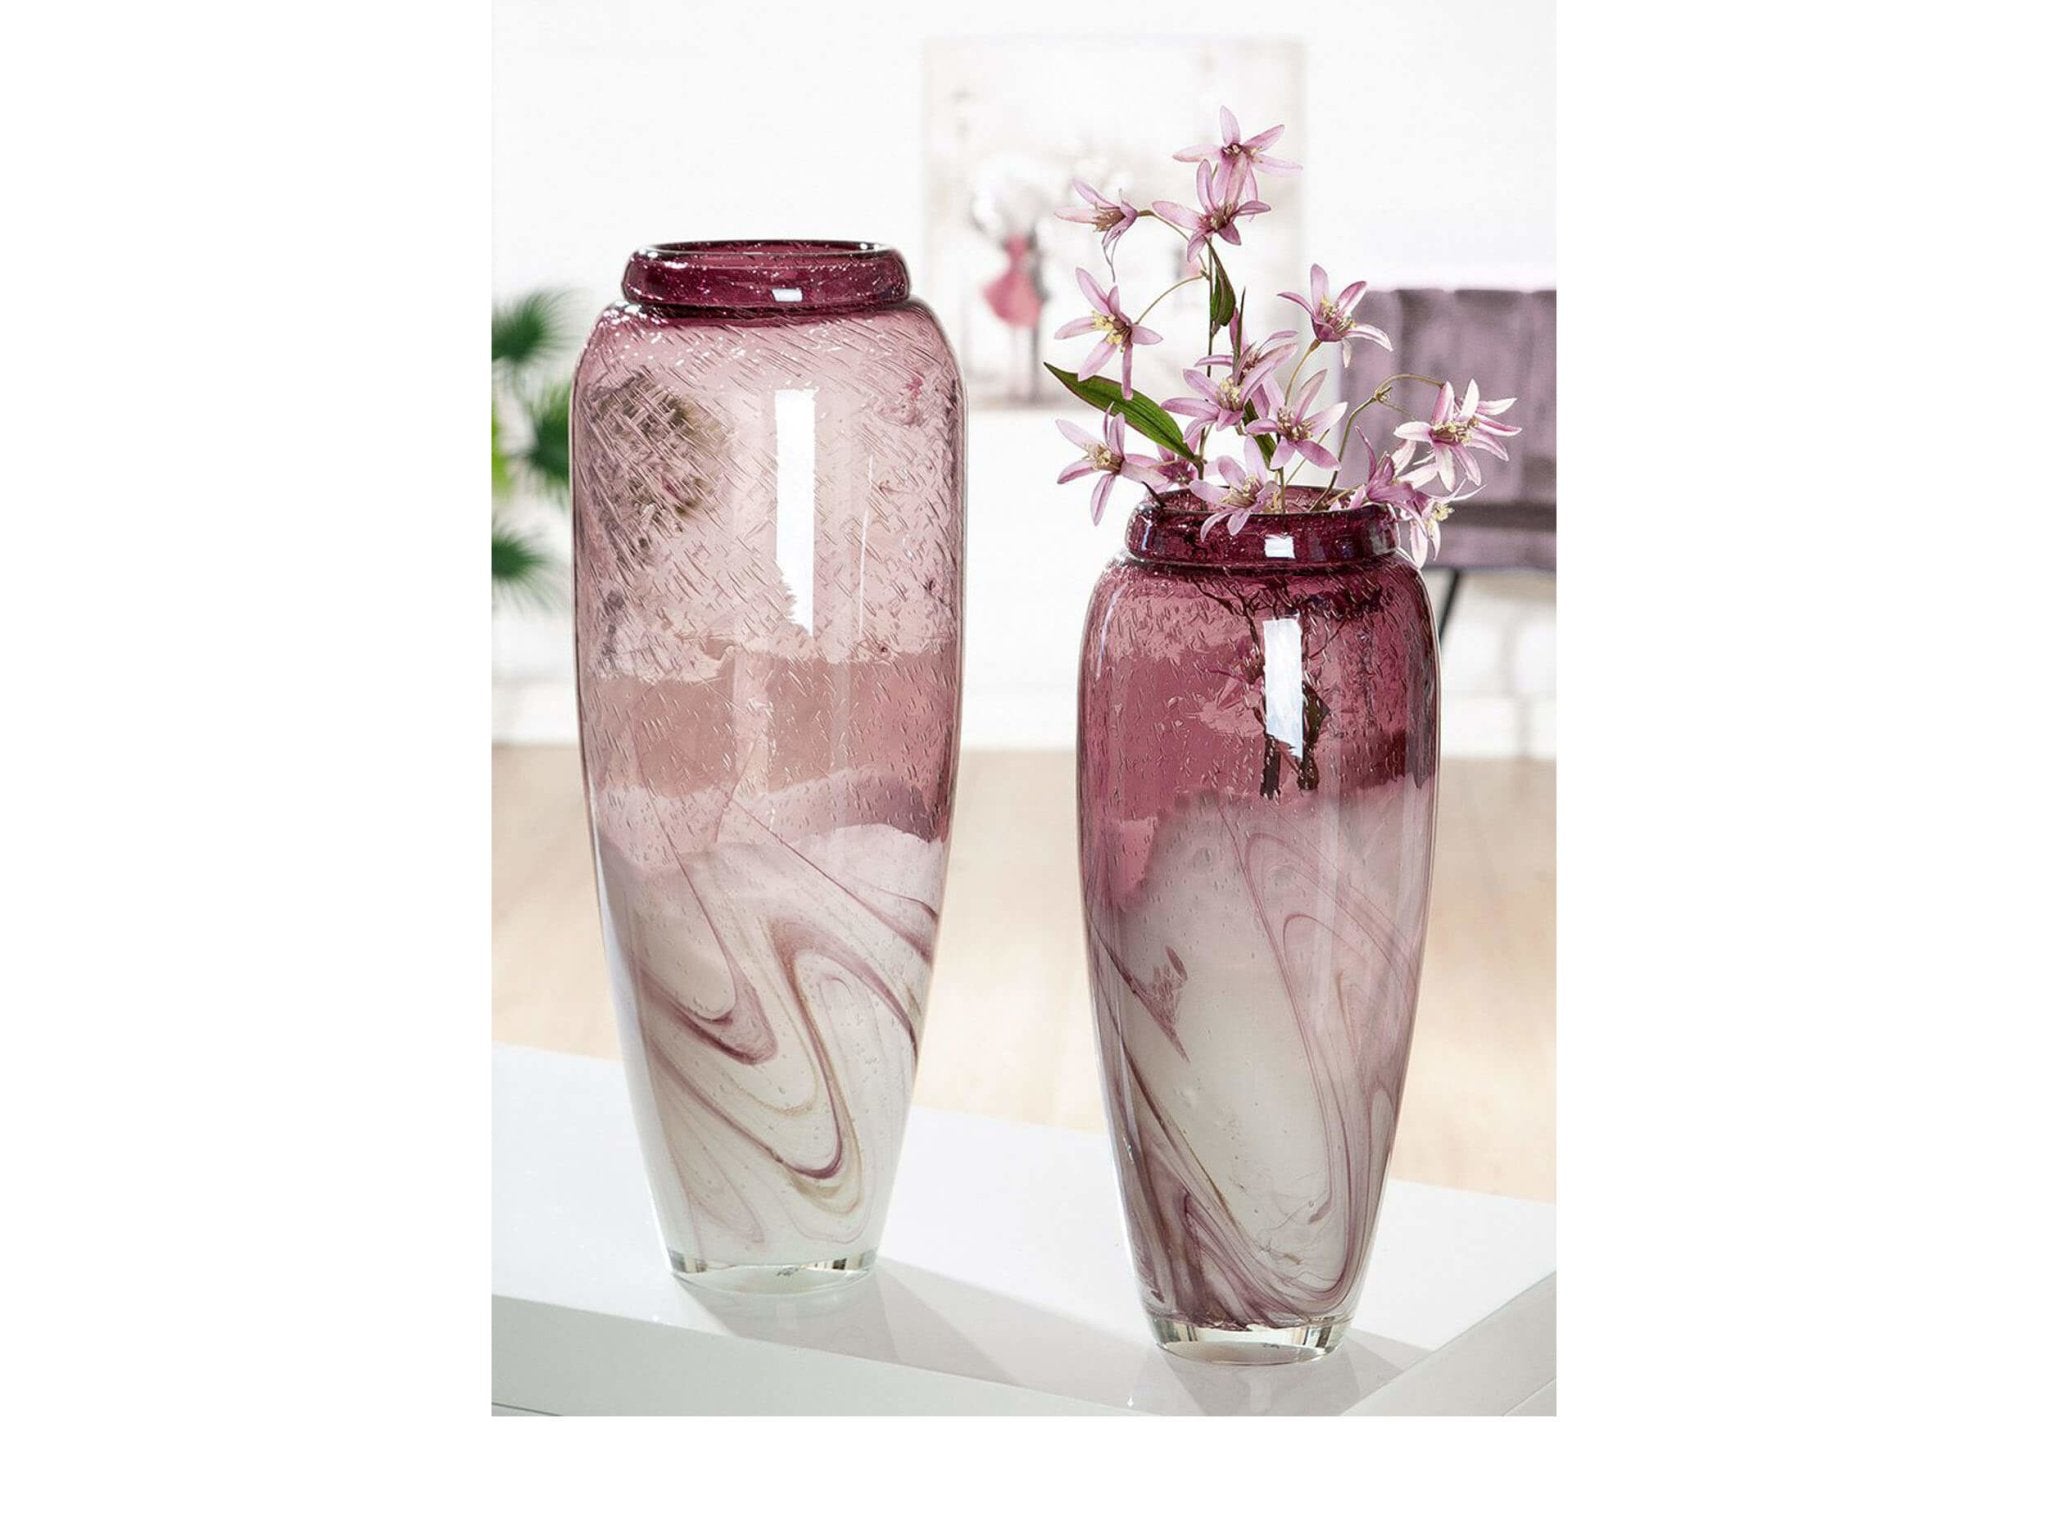 Grote glaskunst tafelvaas van 45 cm in paars en roze motief